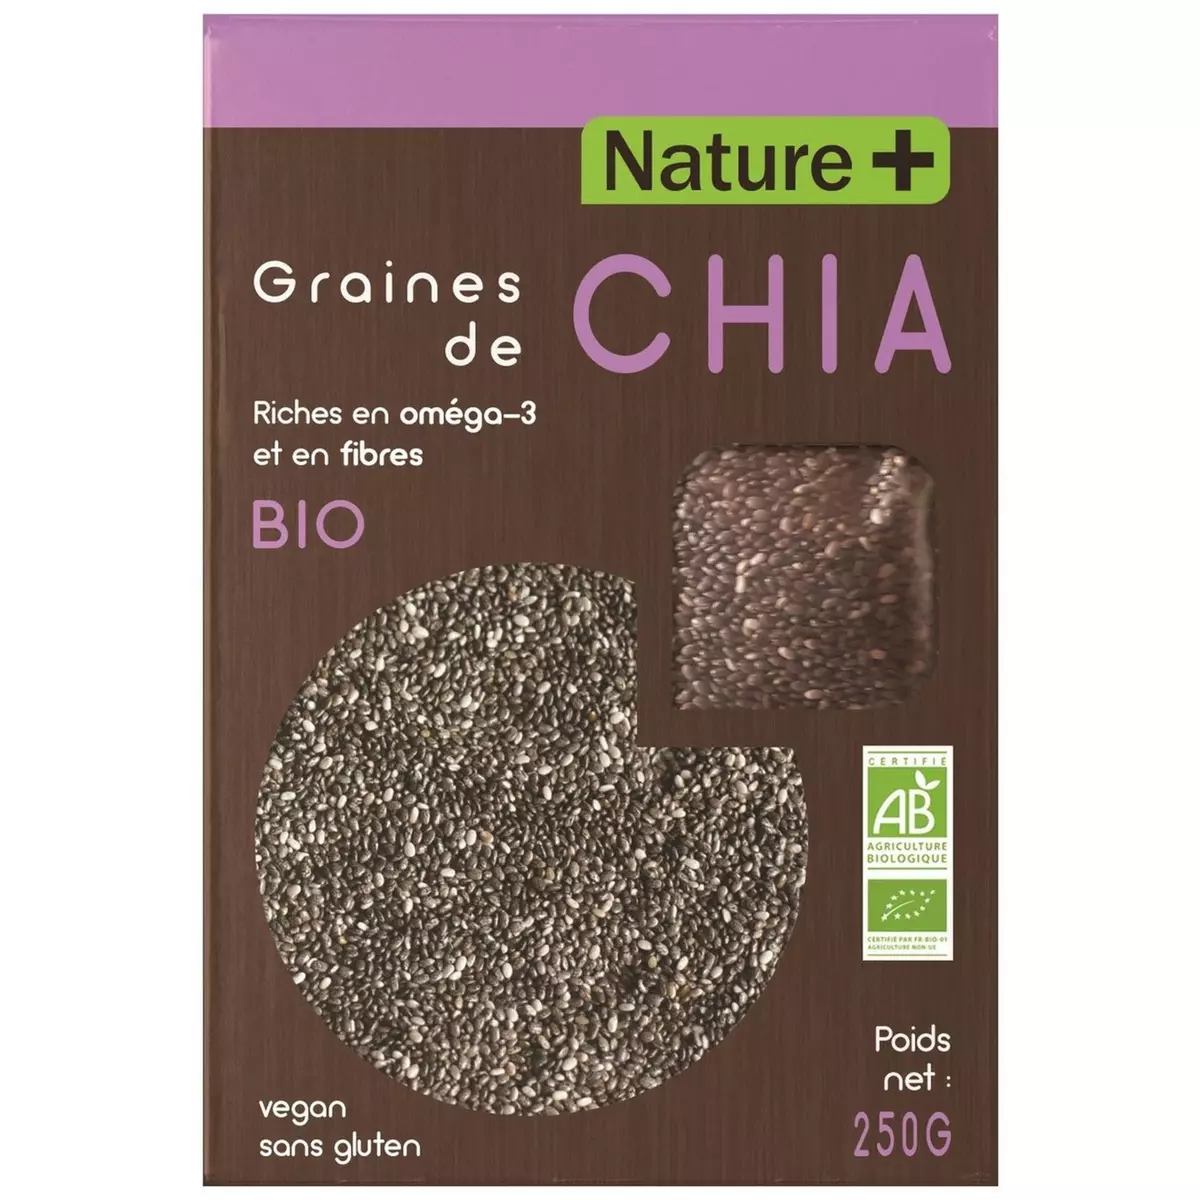 NATURE + Graines de Chia bio 250g pas cher 